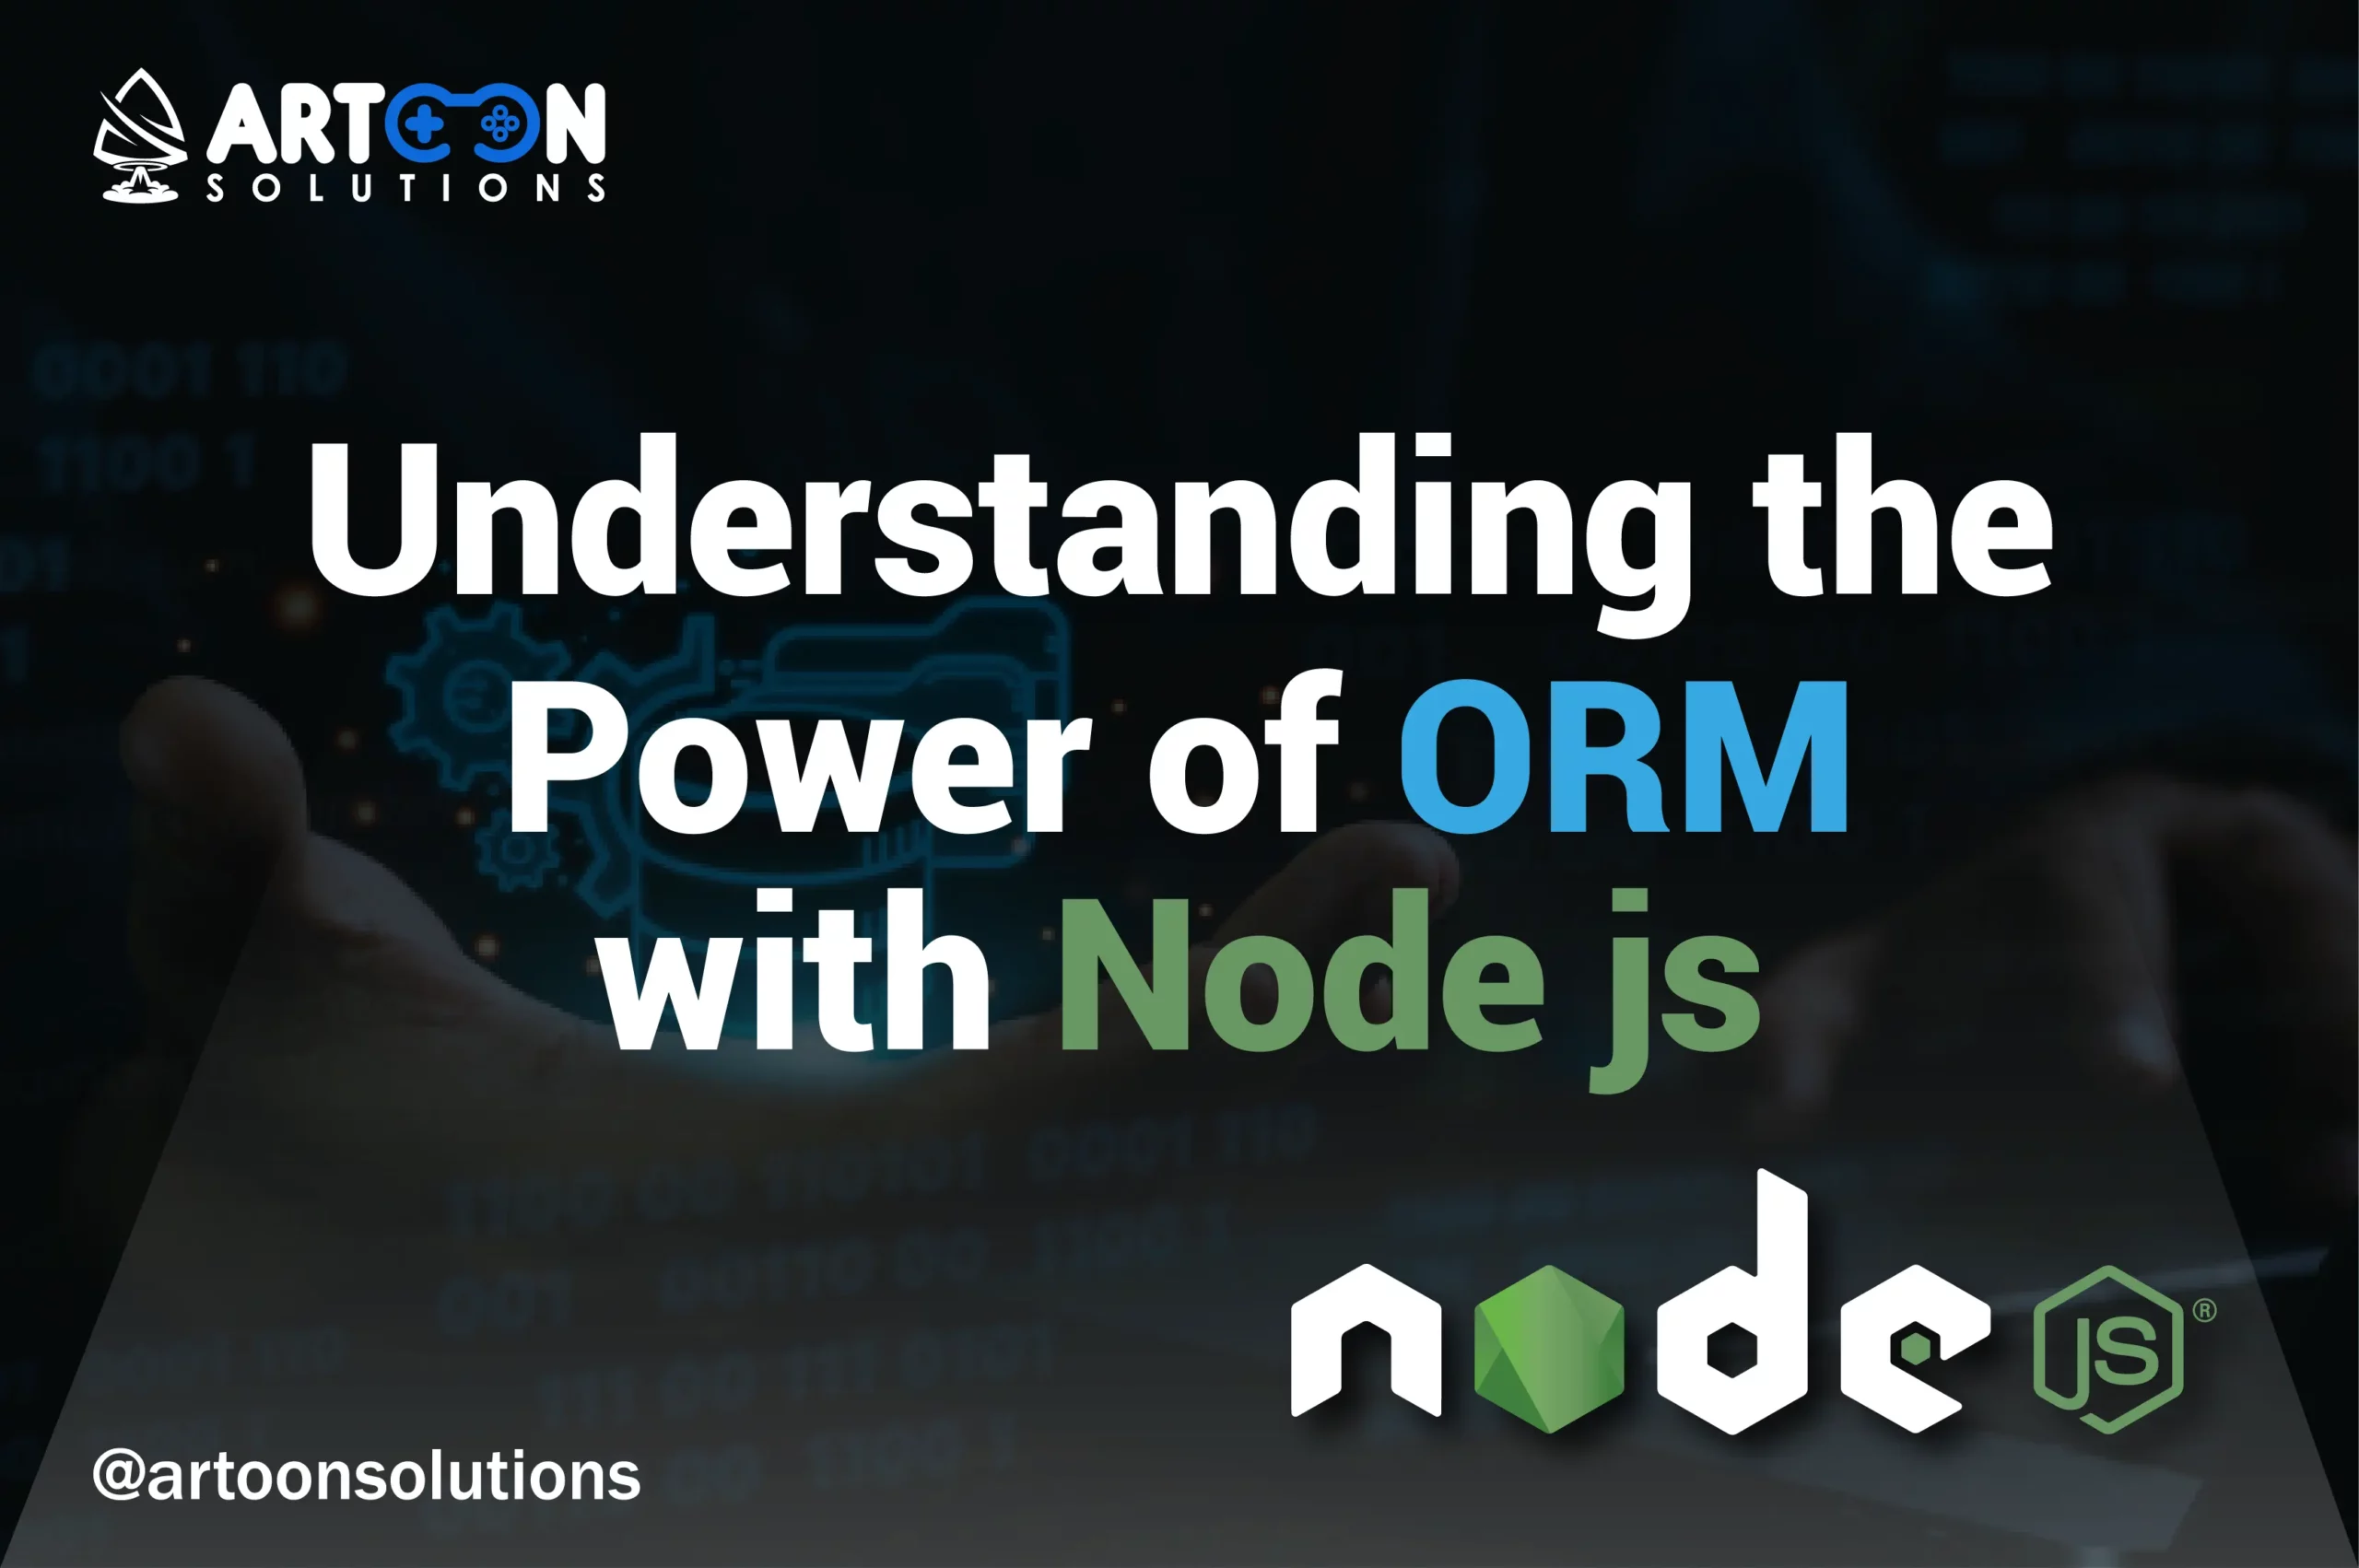 orm with node js